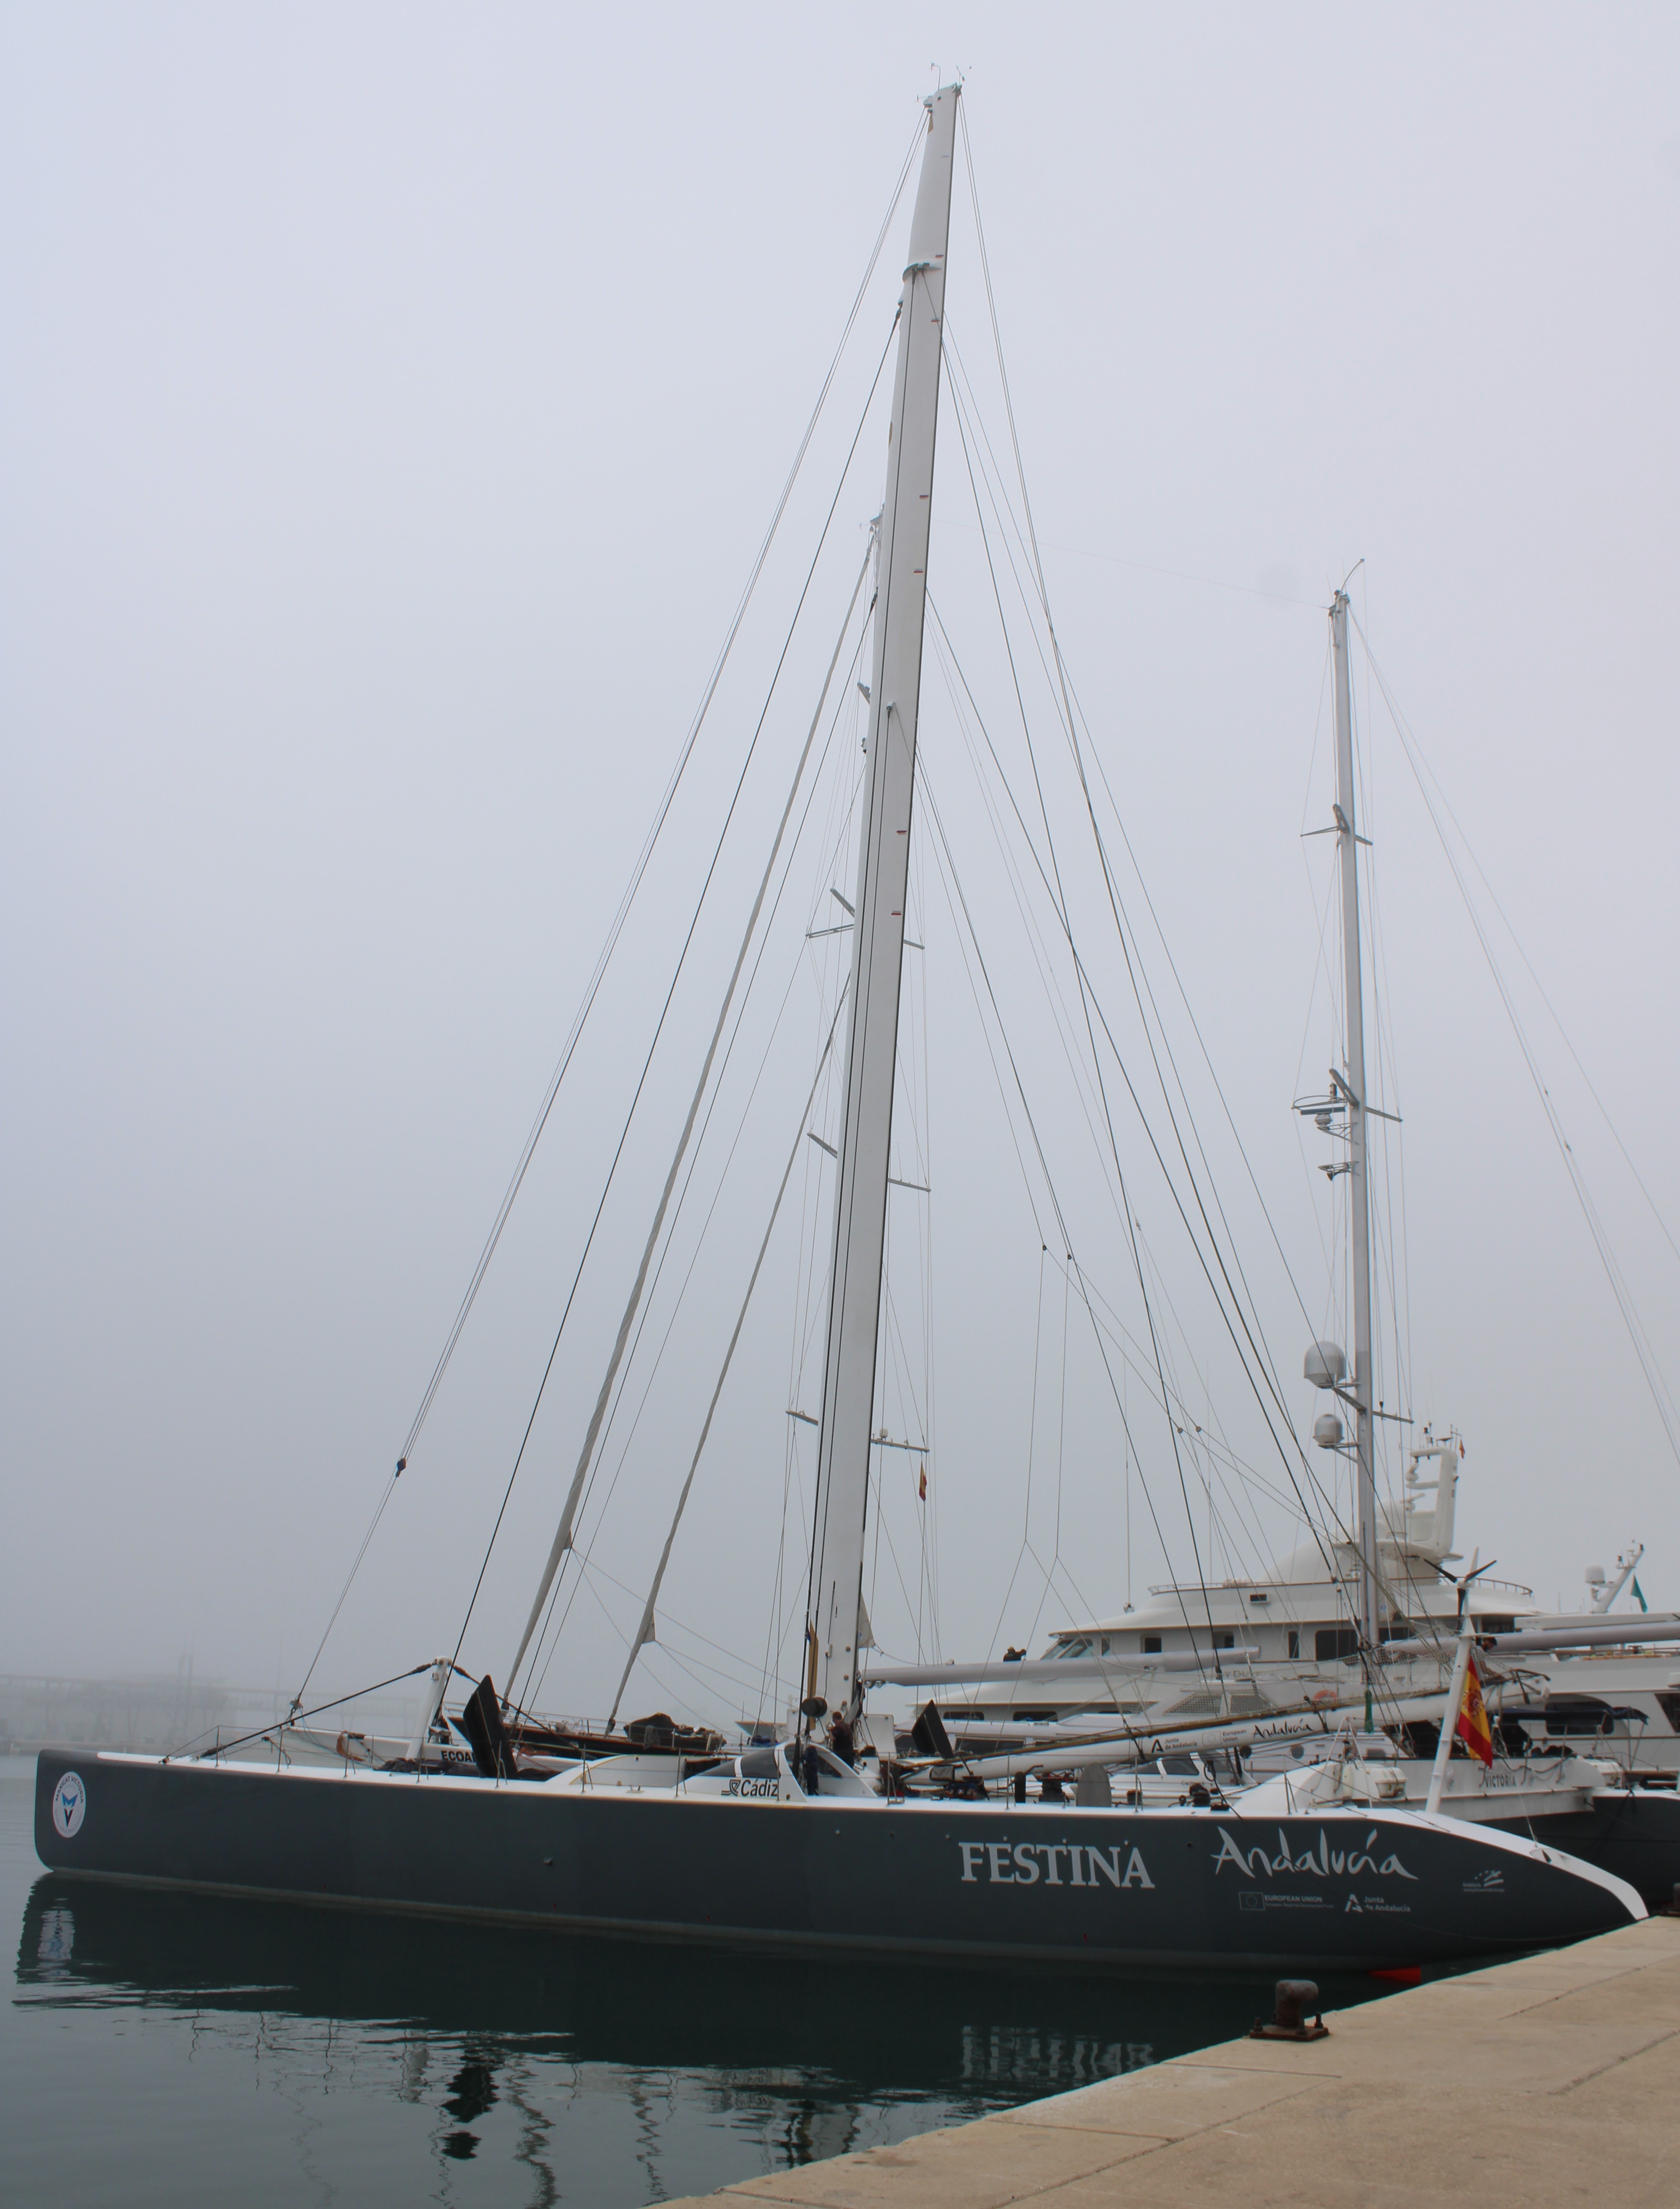 Foto El alcalde Dénia ha visitado el barco “Victoria” del navegante Alex Pella